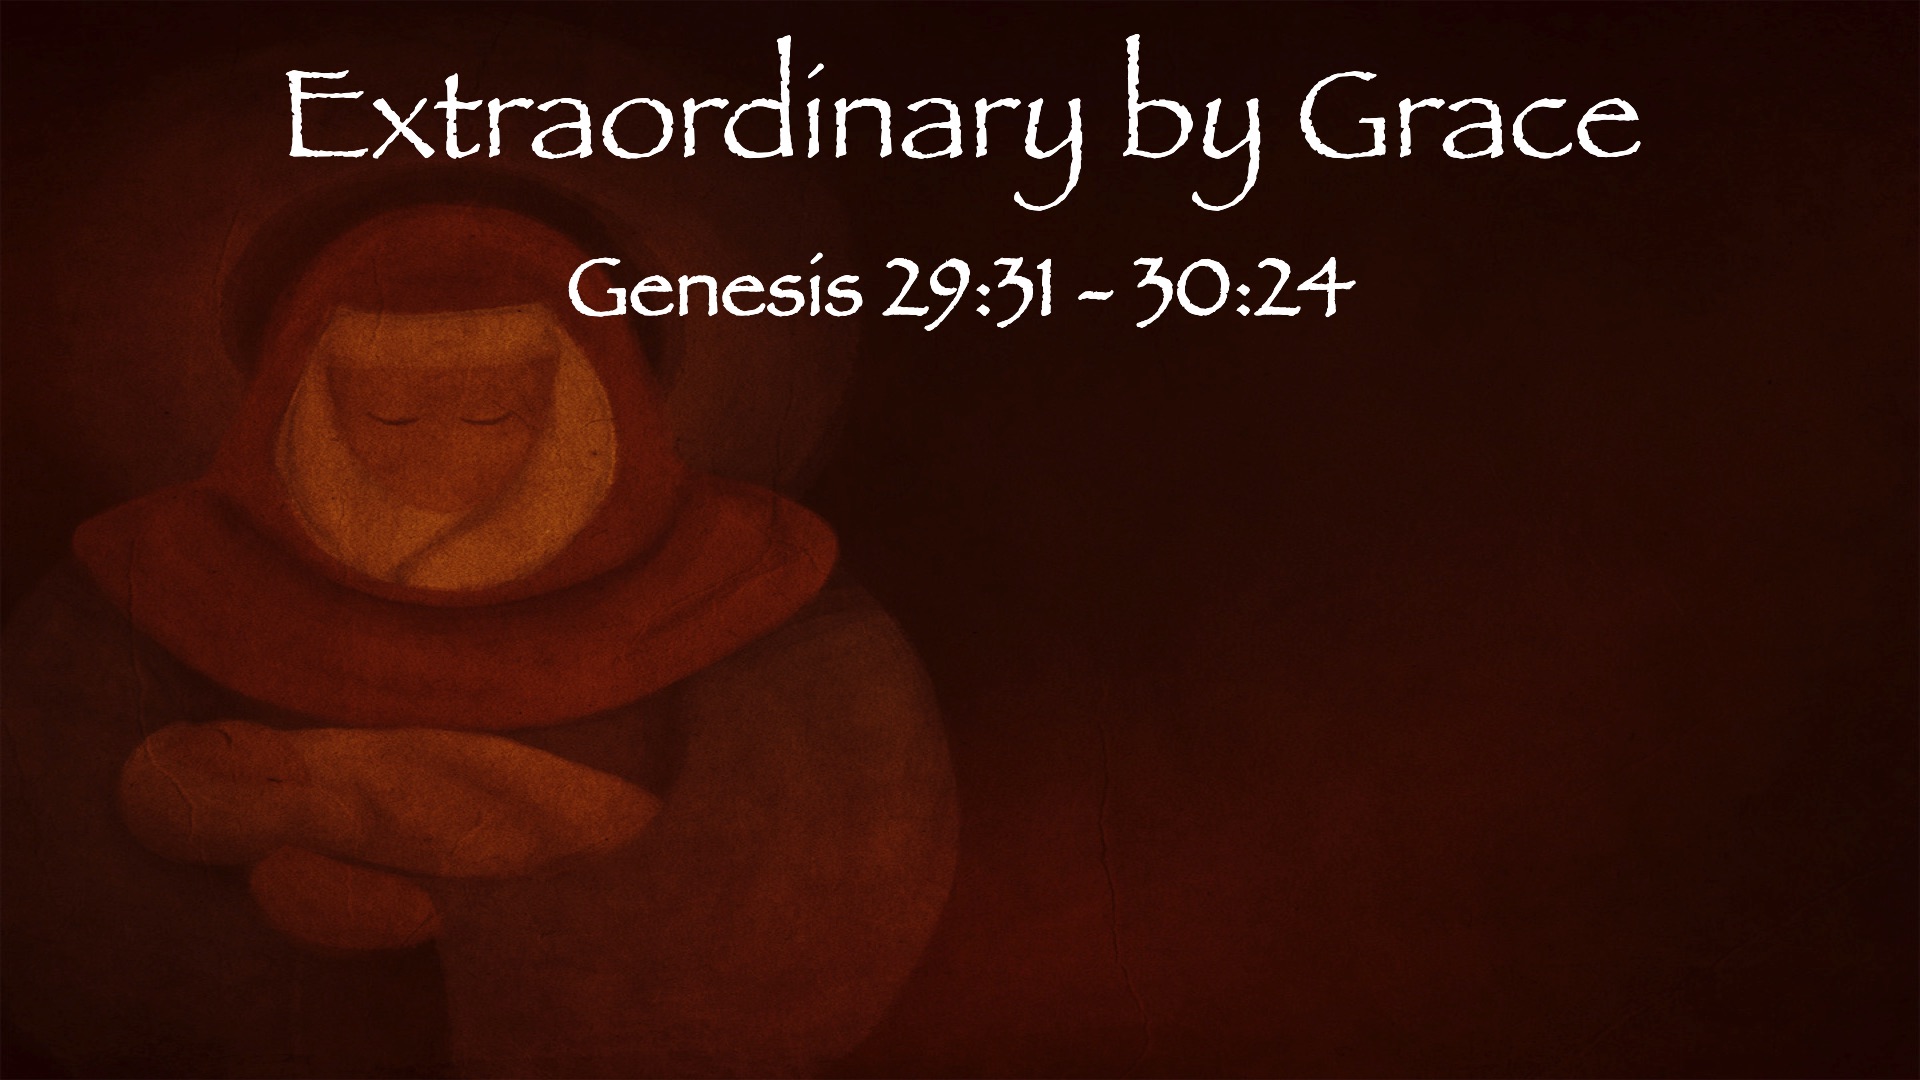 “Extraordinary by Grace”